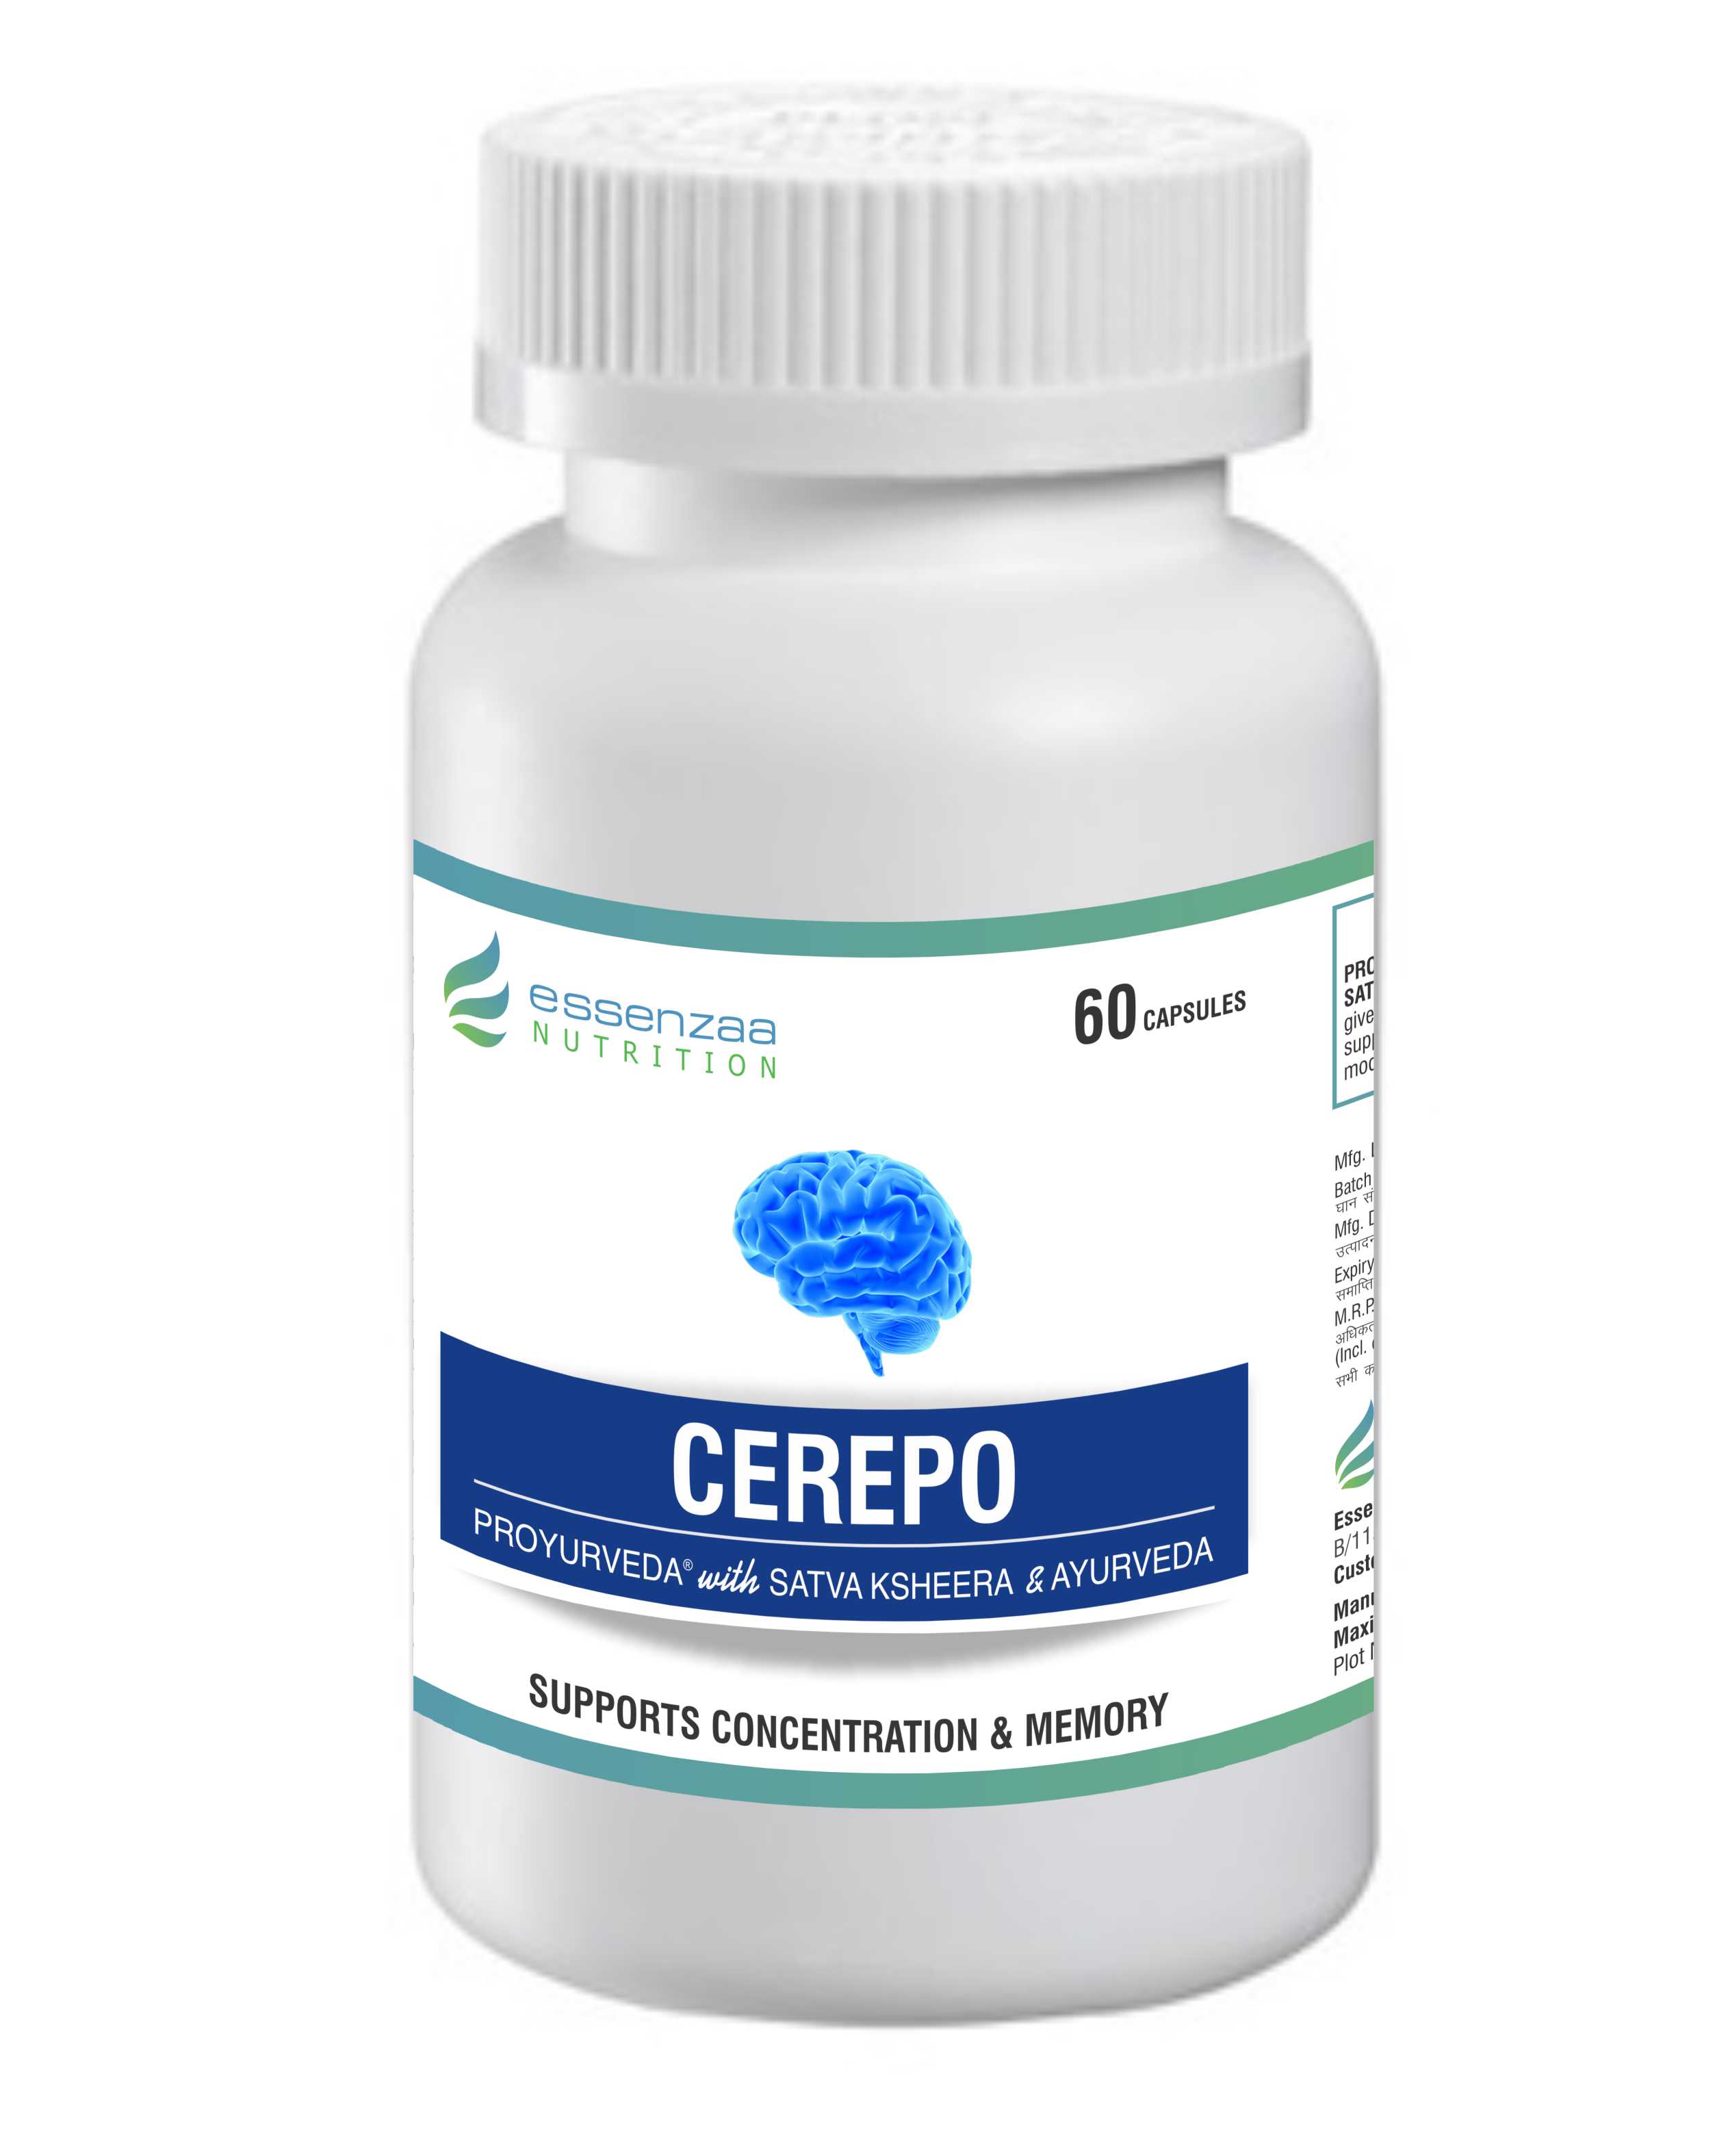 Buy Essenzaa Cerepo Capsule (Maximaa Proyurveda Cerepo Capsule) at Best Price Online